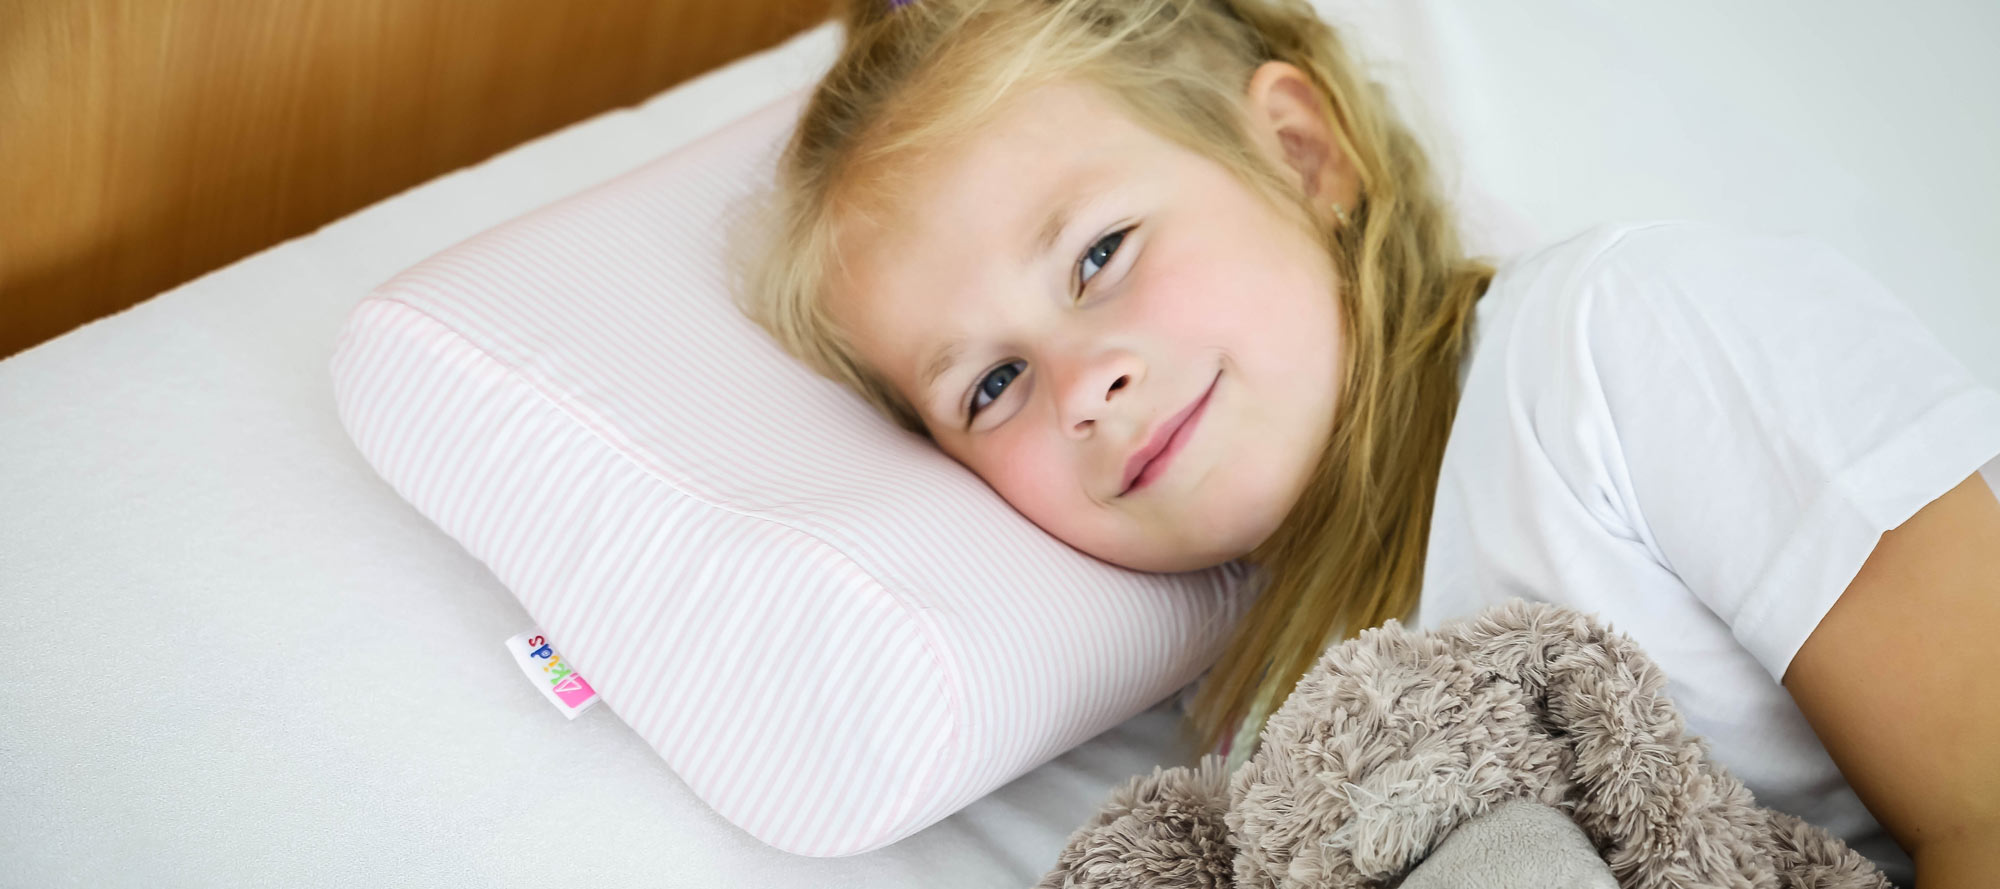 Posture Form Ergonomic Kids Pillow – Posture Form Pillows